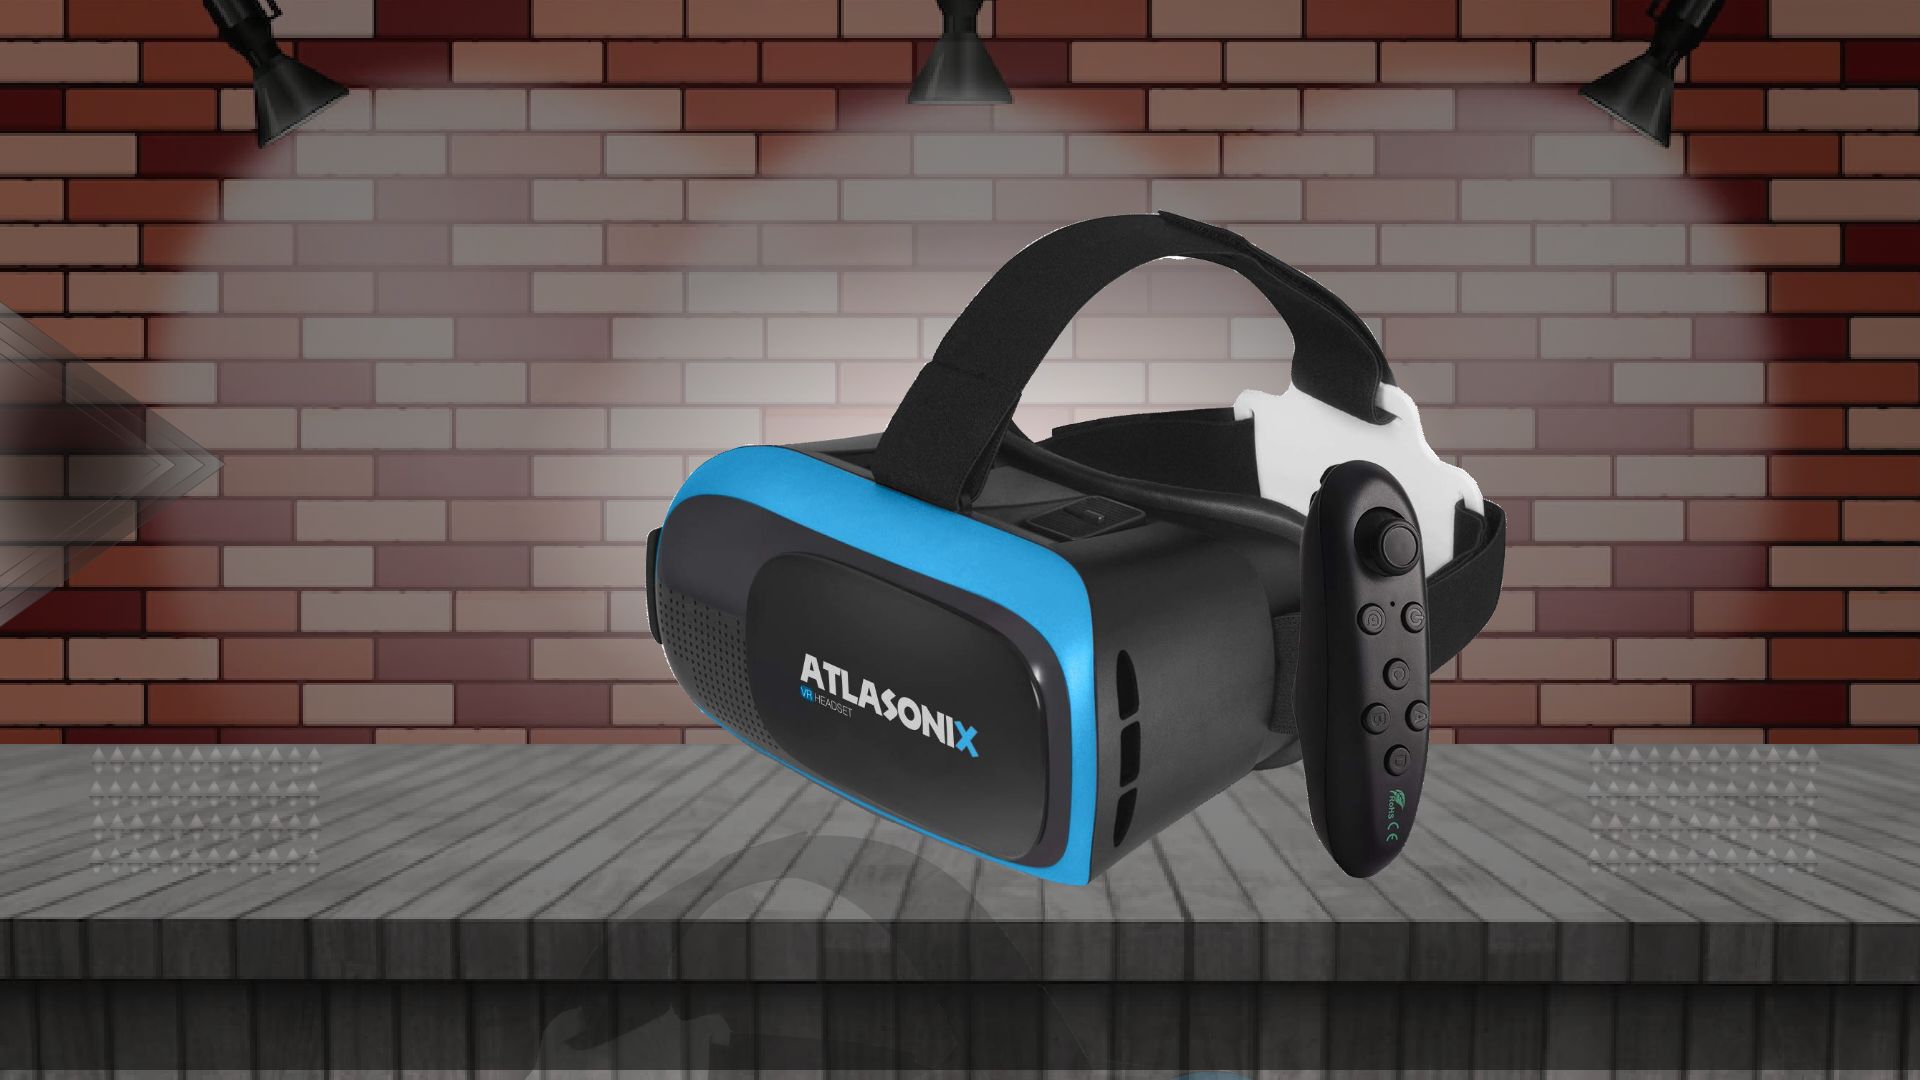 Atlasonix VR Headset